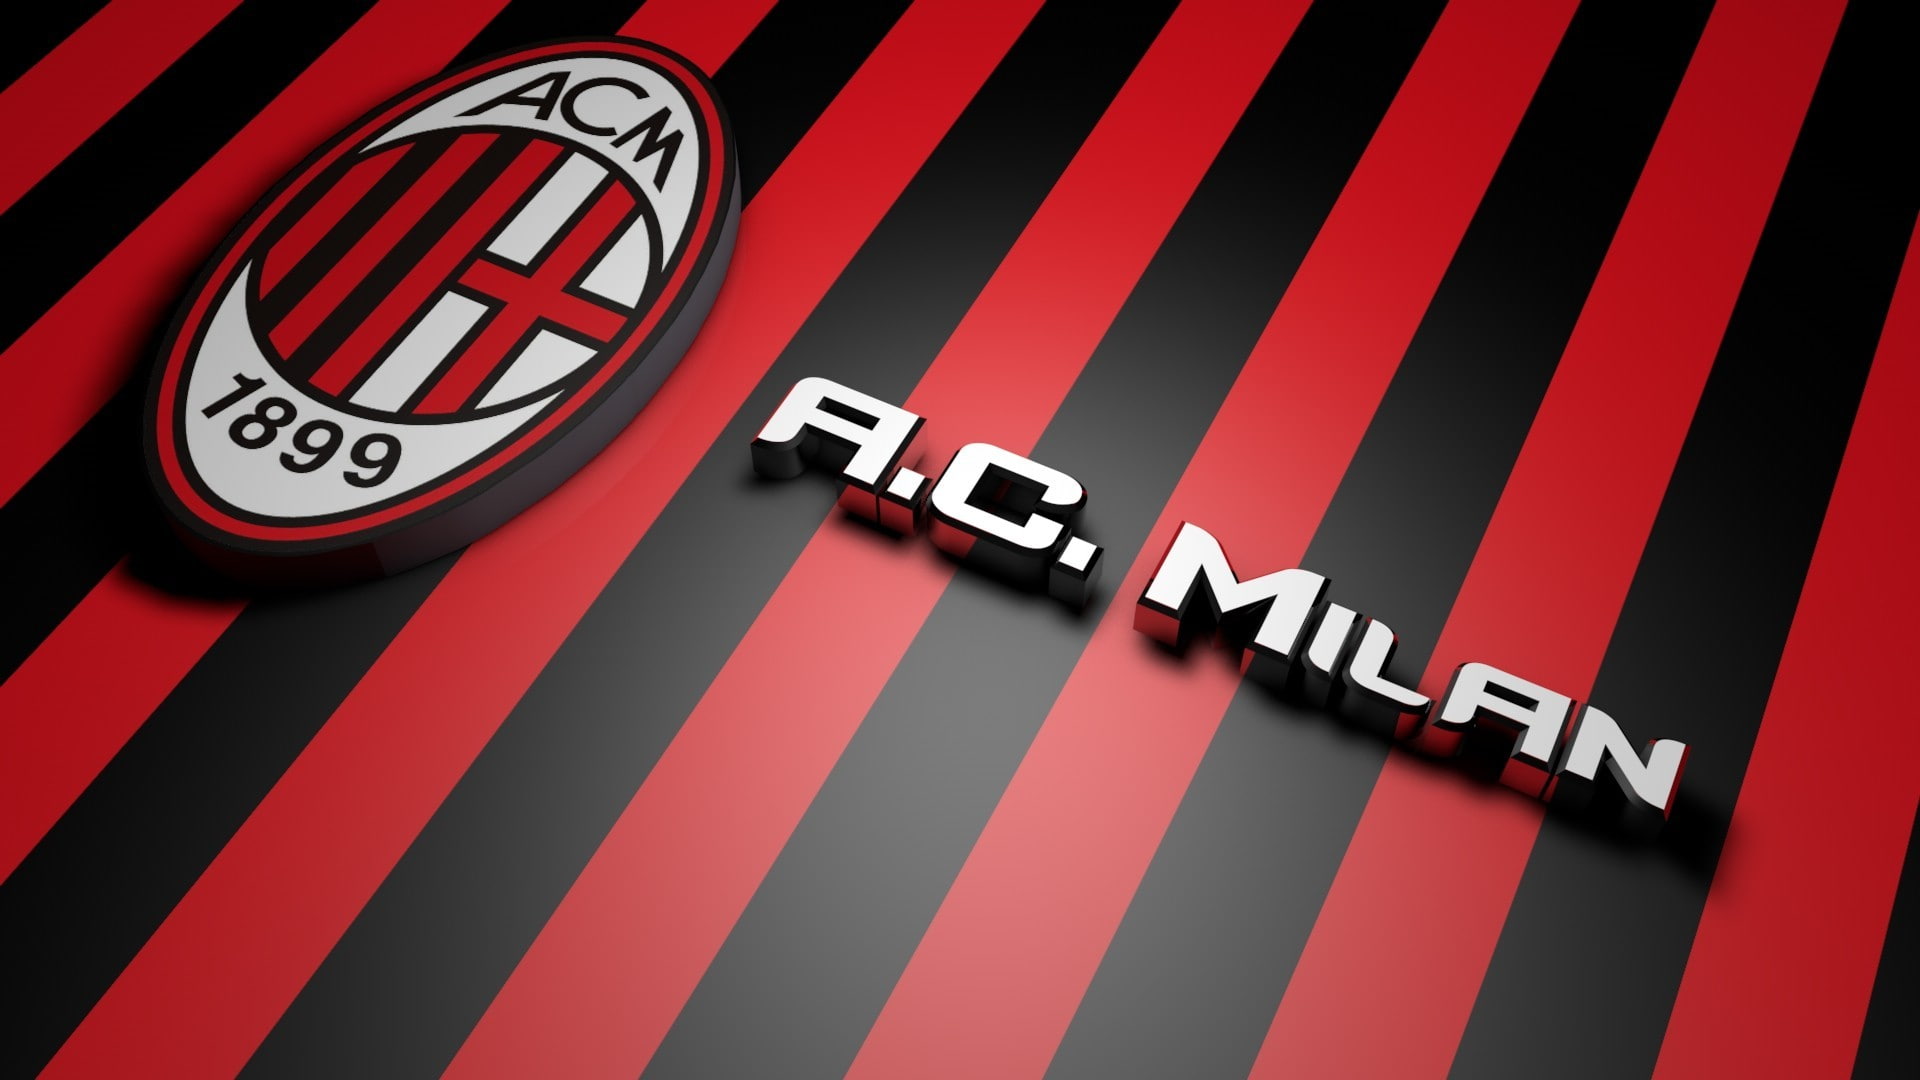 AC Milan, soccer clubs, logo, sports club